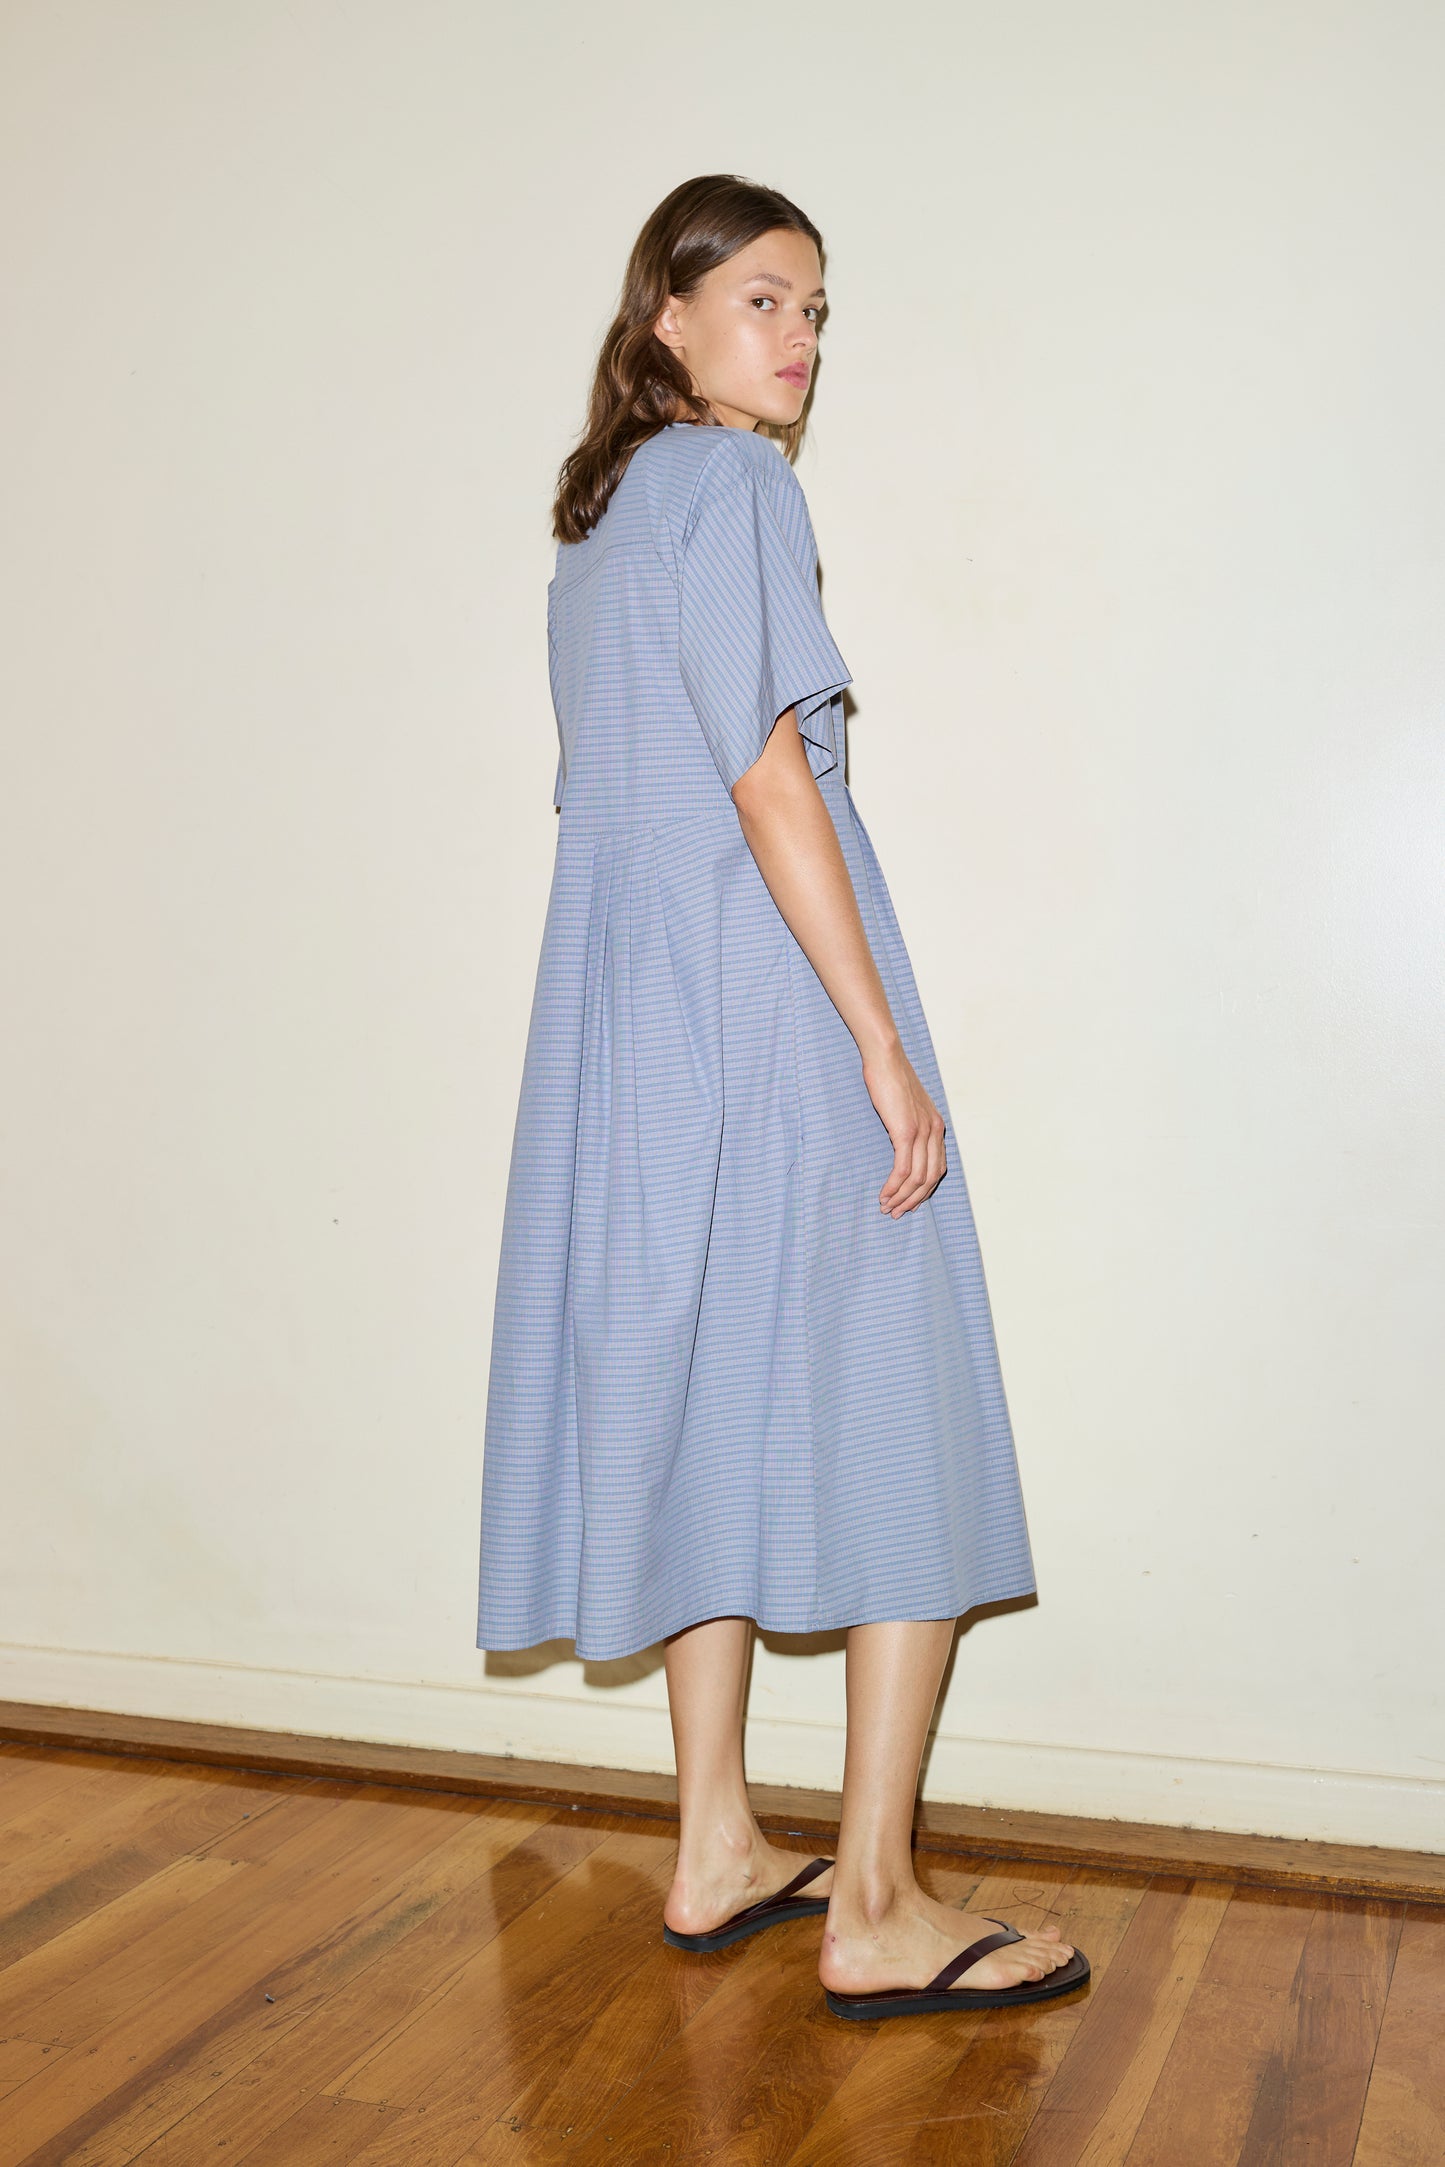 Female model wearing The Square Sleeve Dress - Pillow Check by Deiji Studios against plain background